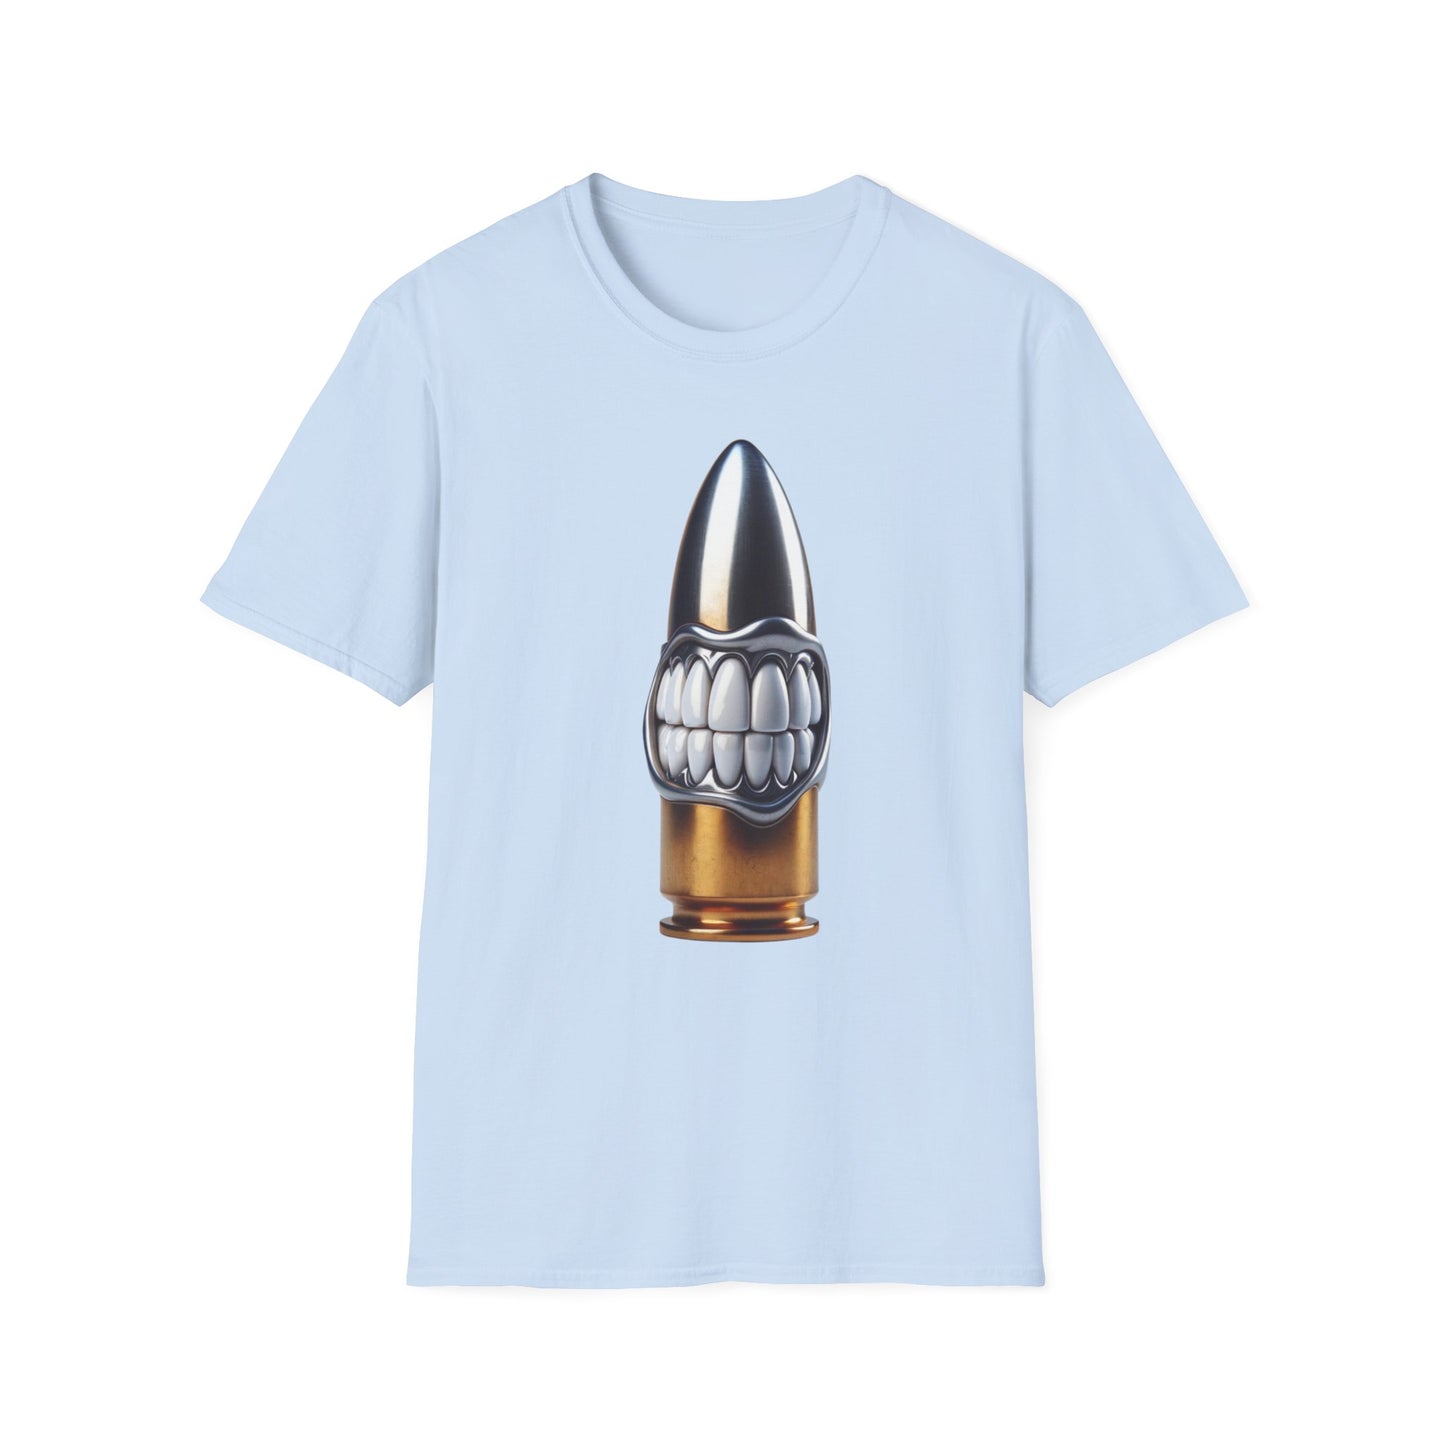 Da rienda suelta a tu estilo atrevido: camiseta Bite The Bullet